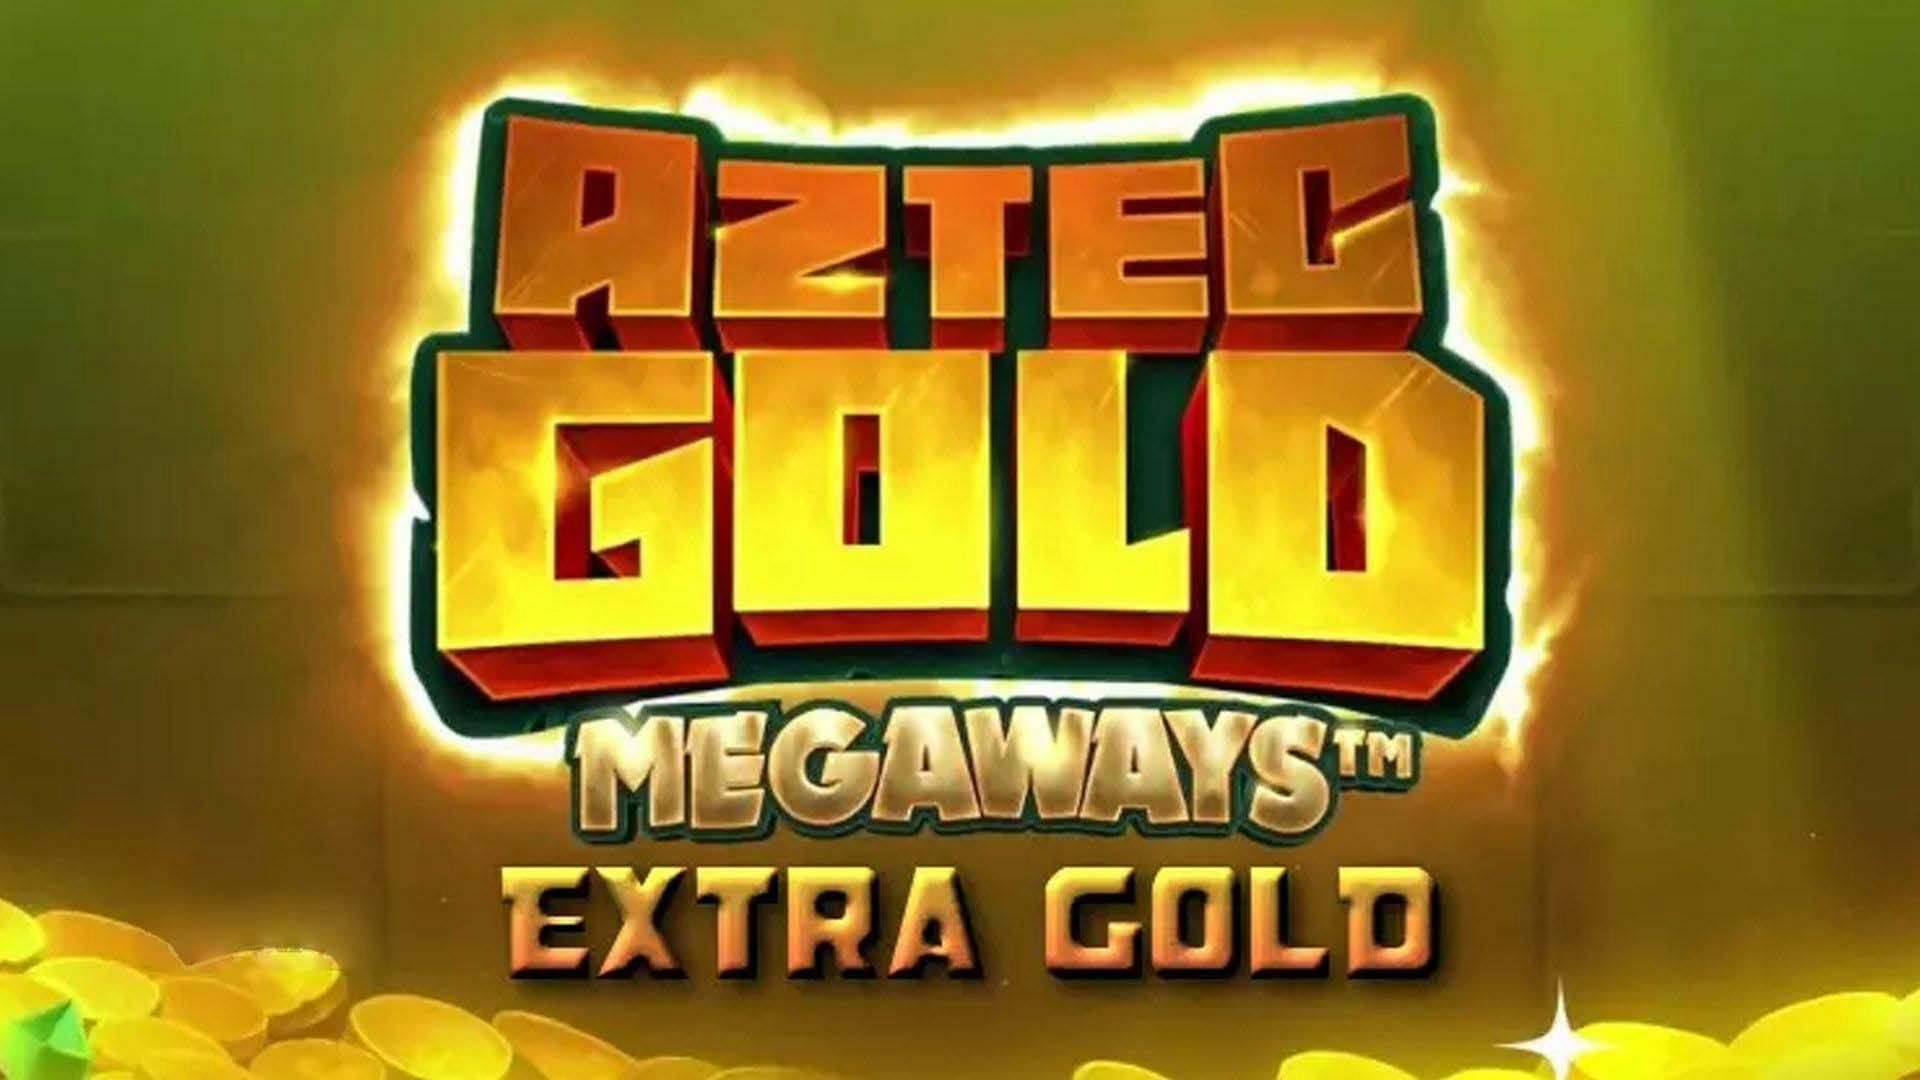 Online Slot Aztec Gold Extra Gold Megaways Free Demo